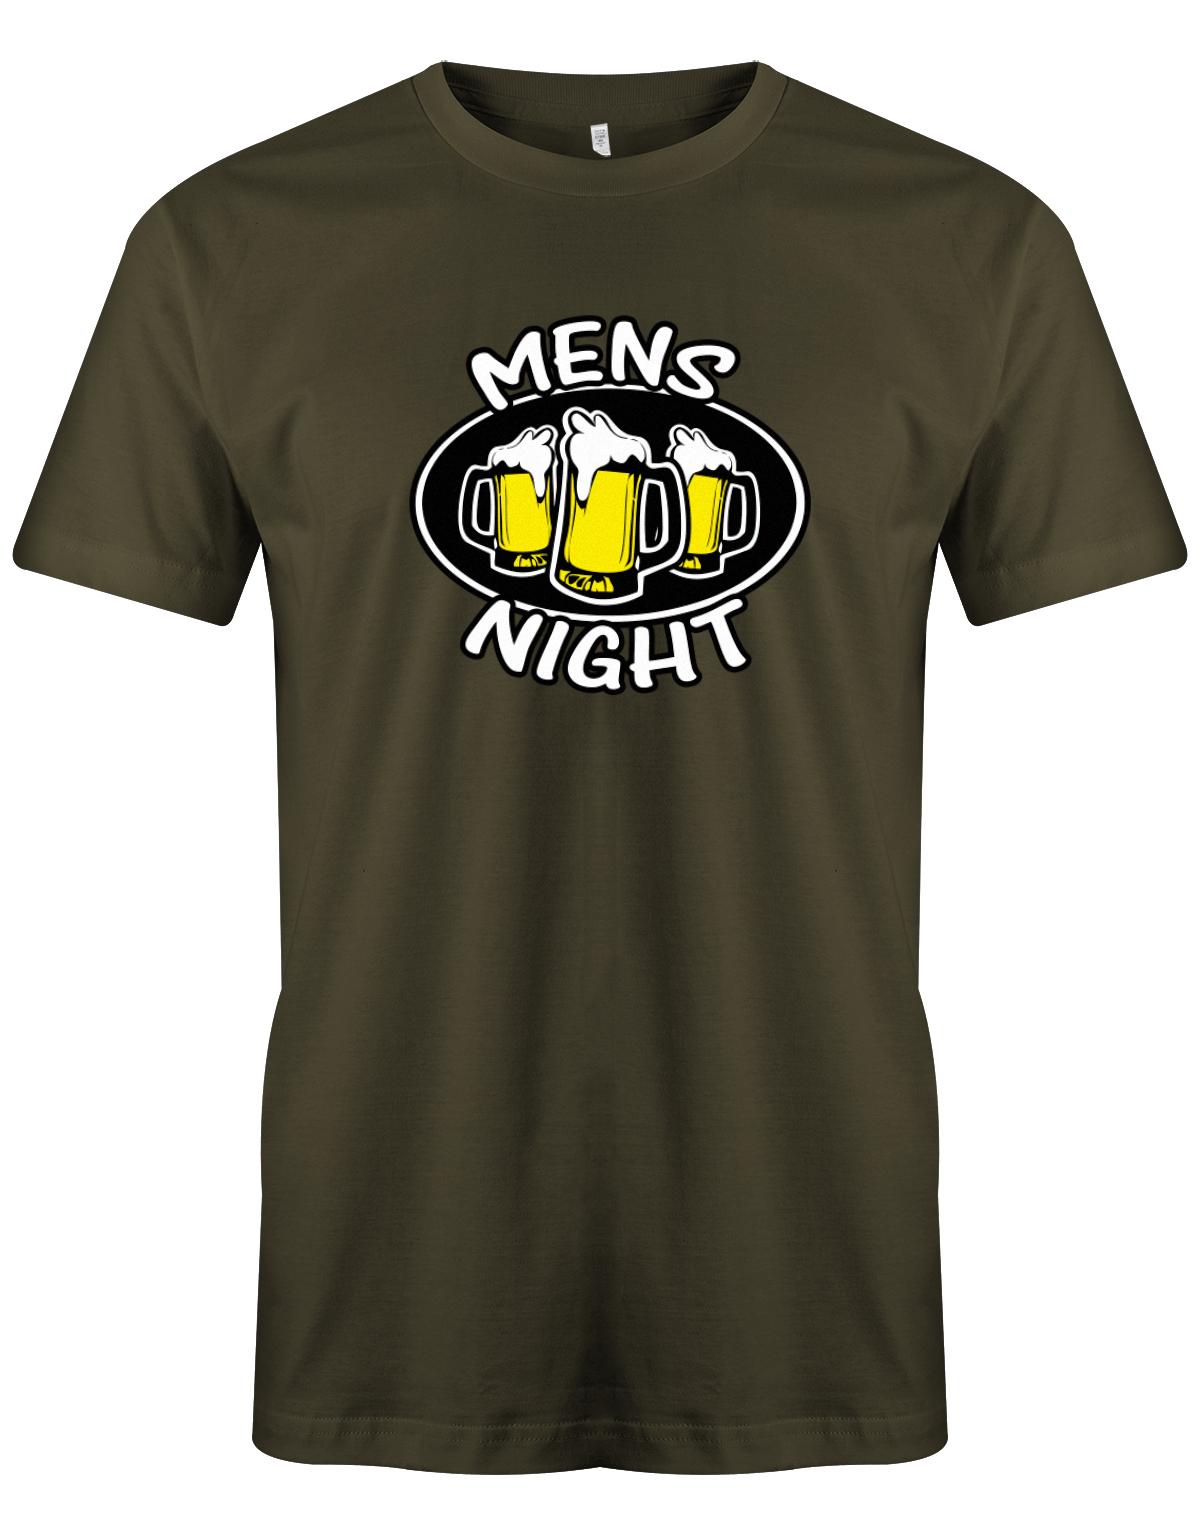 Mens-Night-Bier-Herren-Shirt-Army